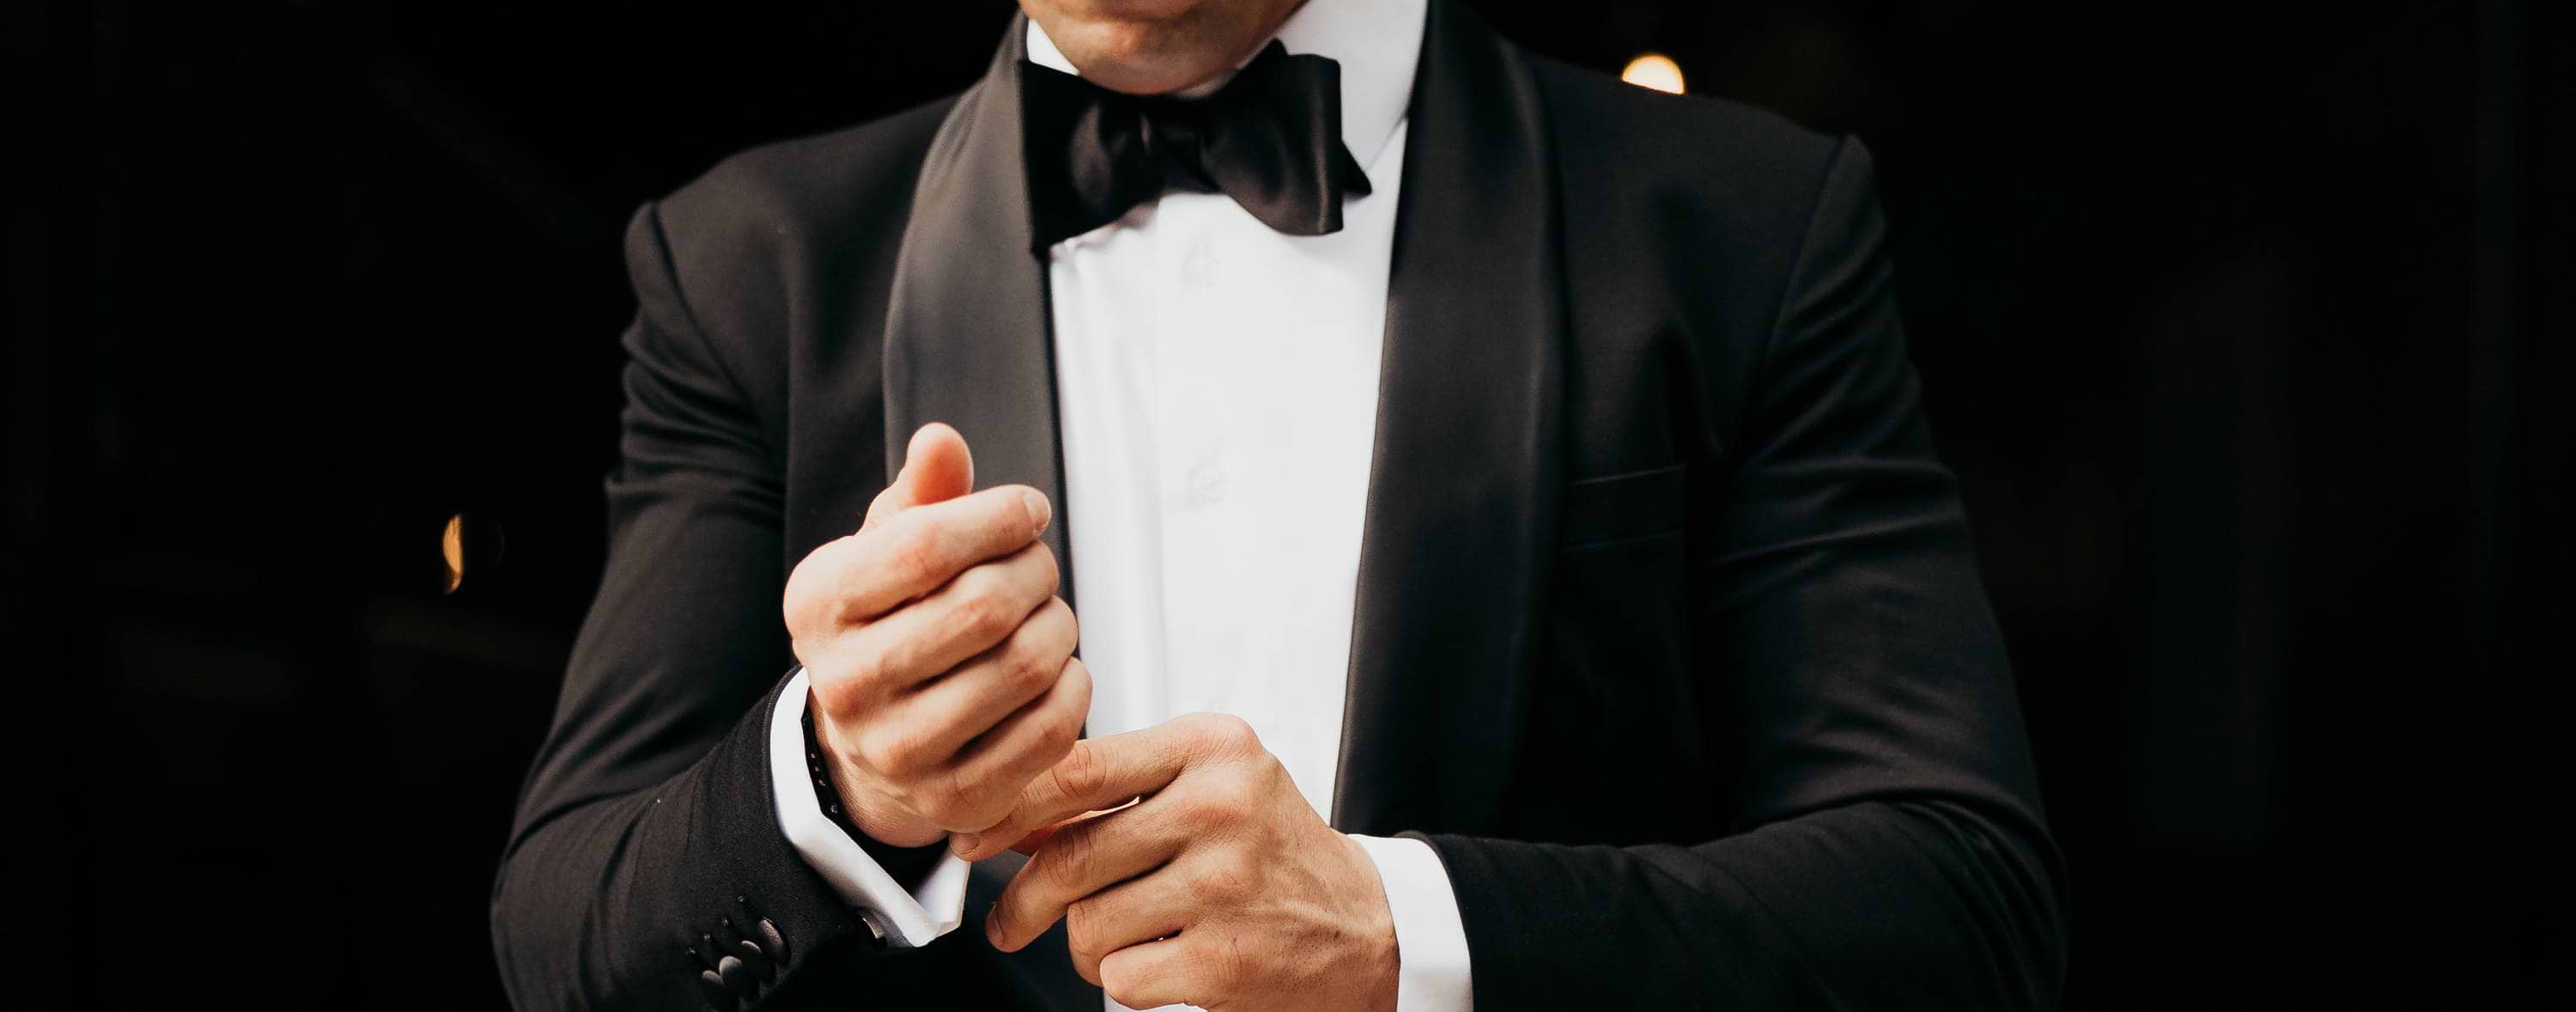 Black Tie Optional Dress Code - For Men